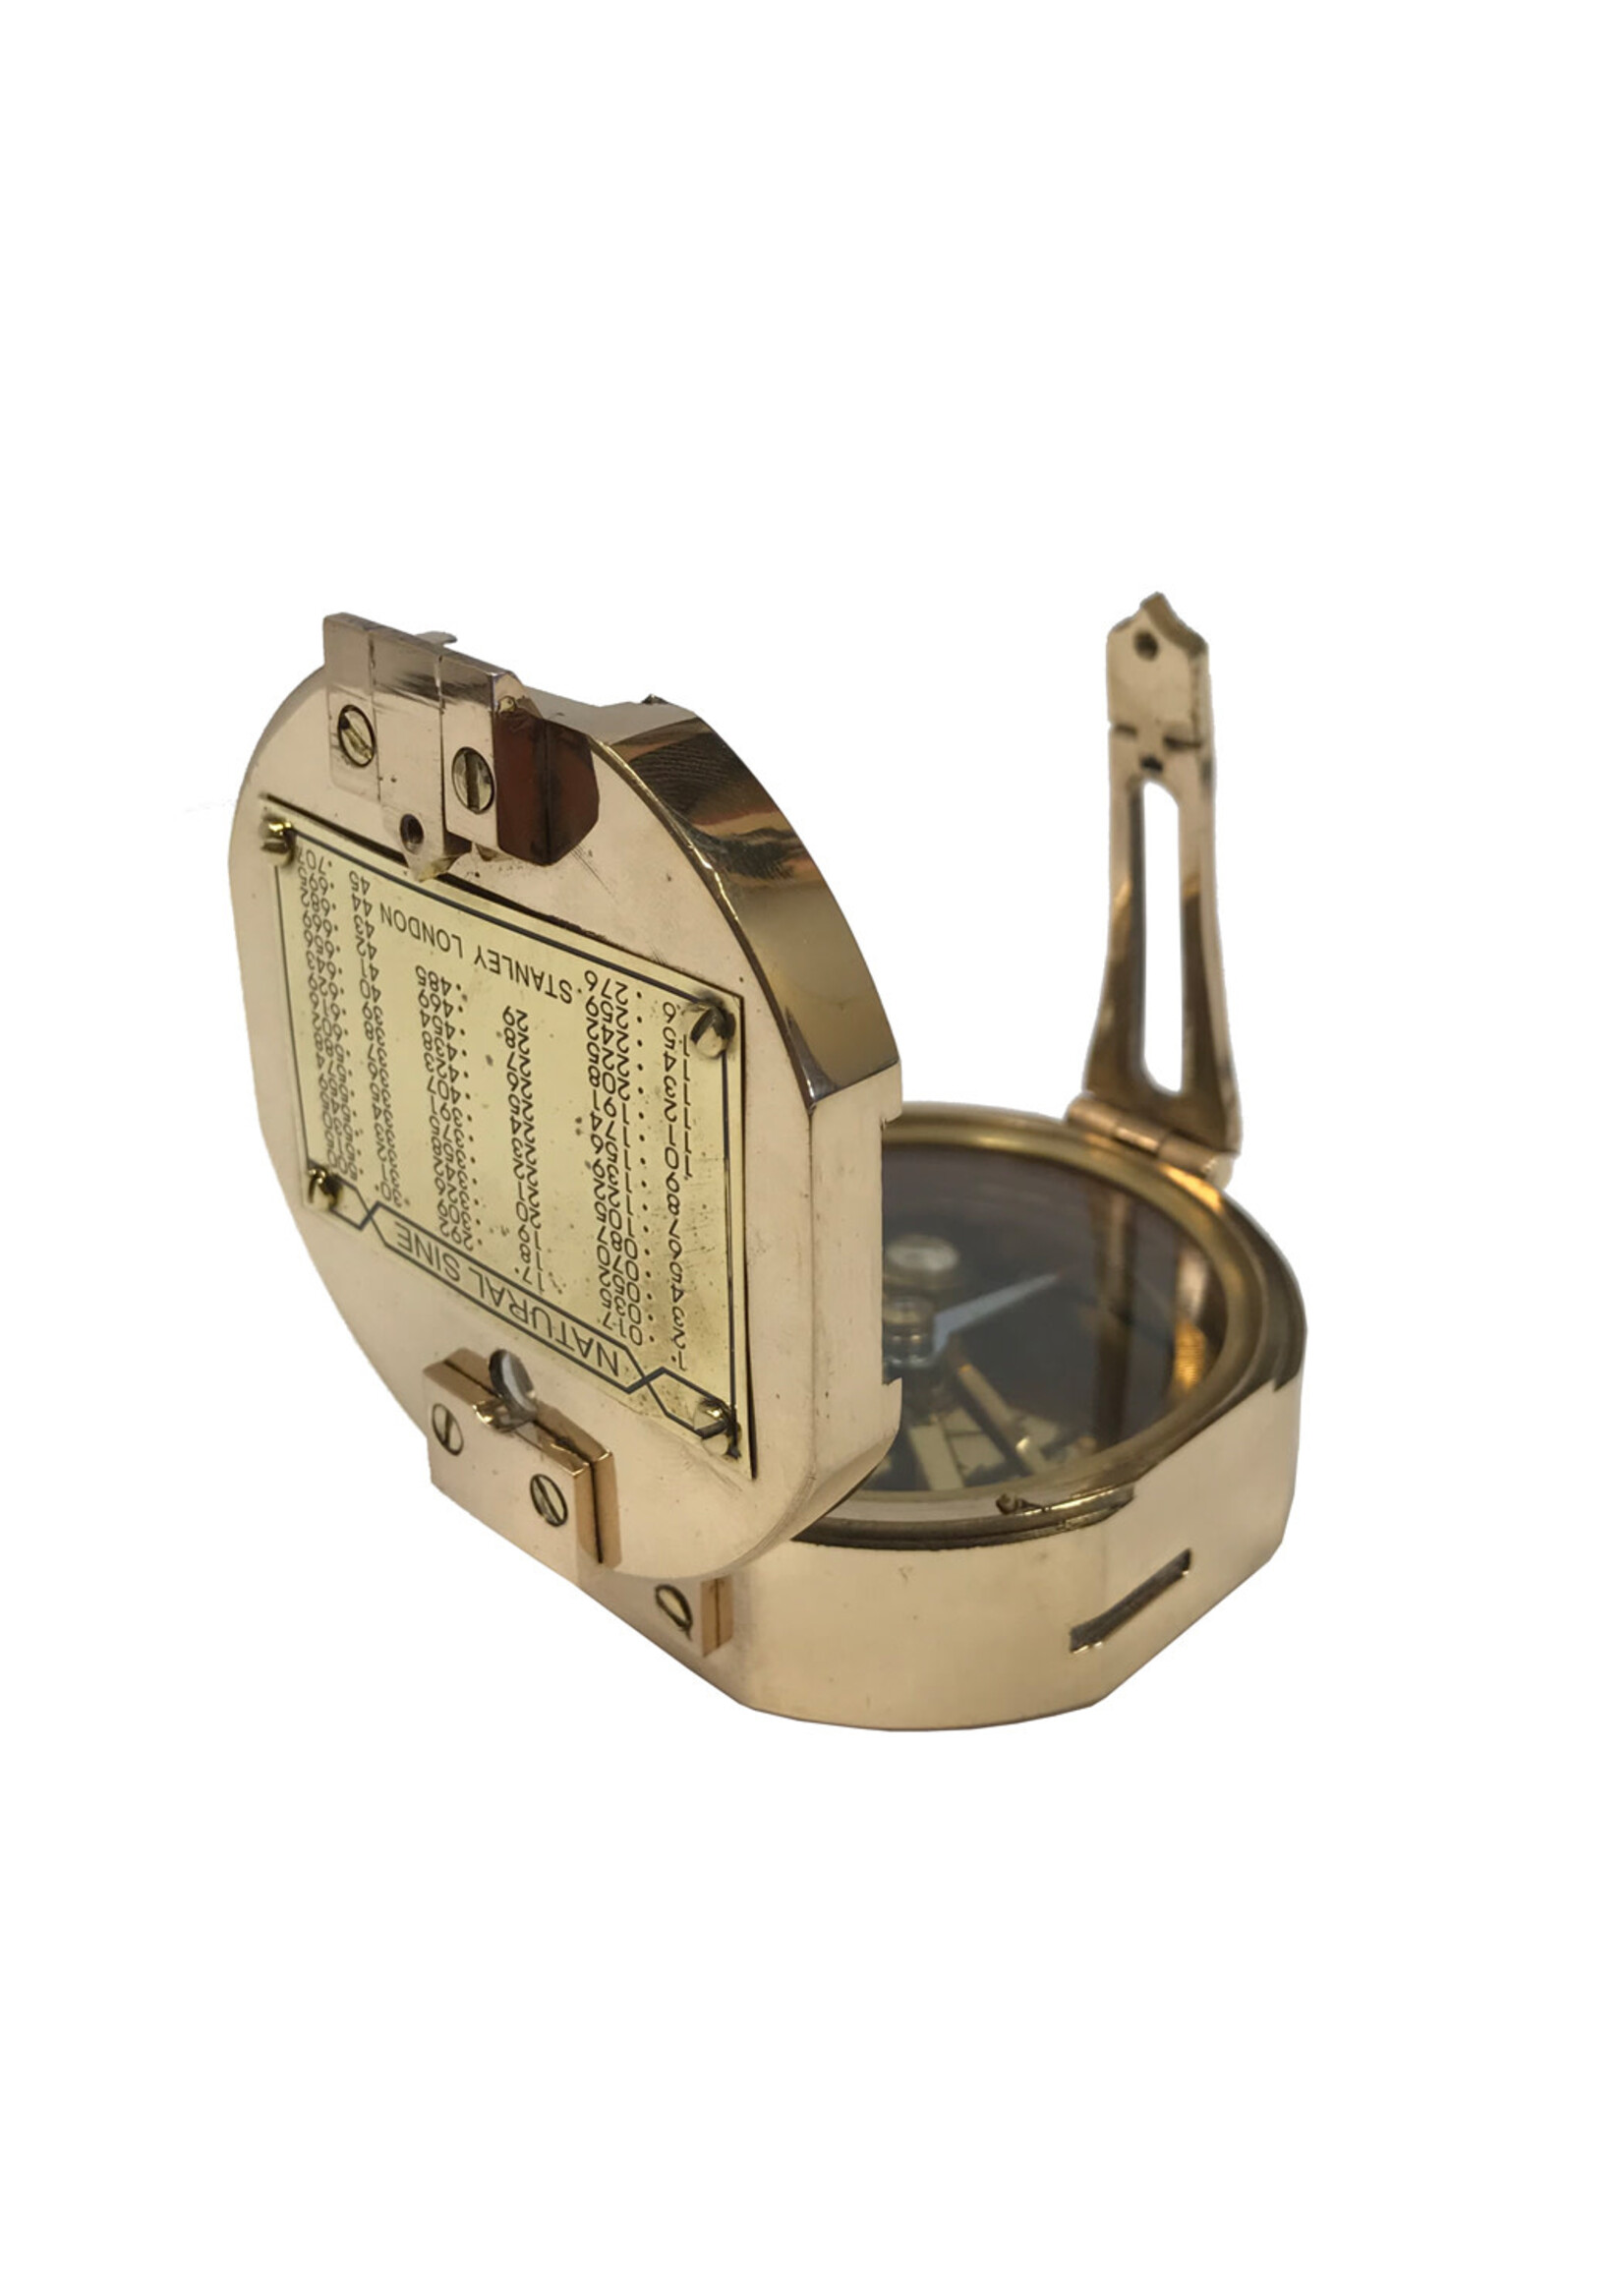 3″ Brass Brunton-Style Compass in Wood Box w/ Brass Accent